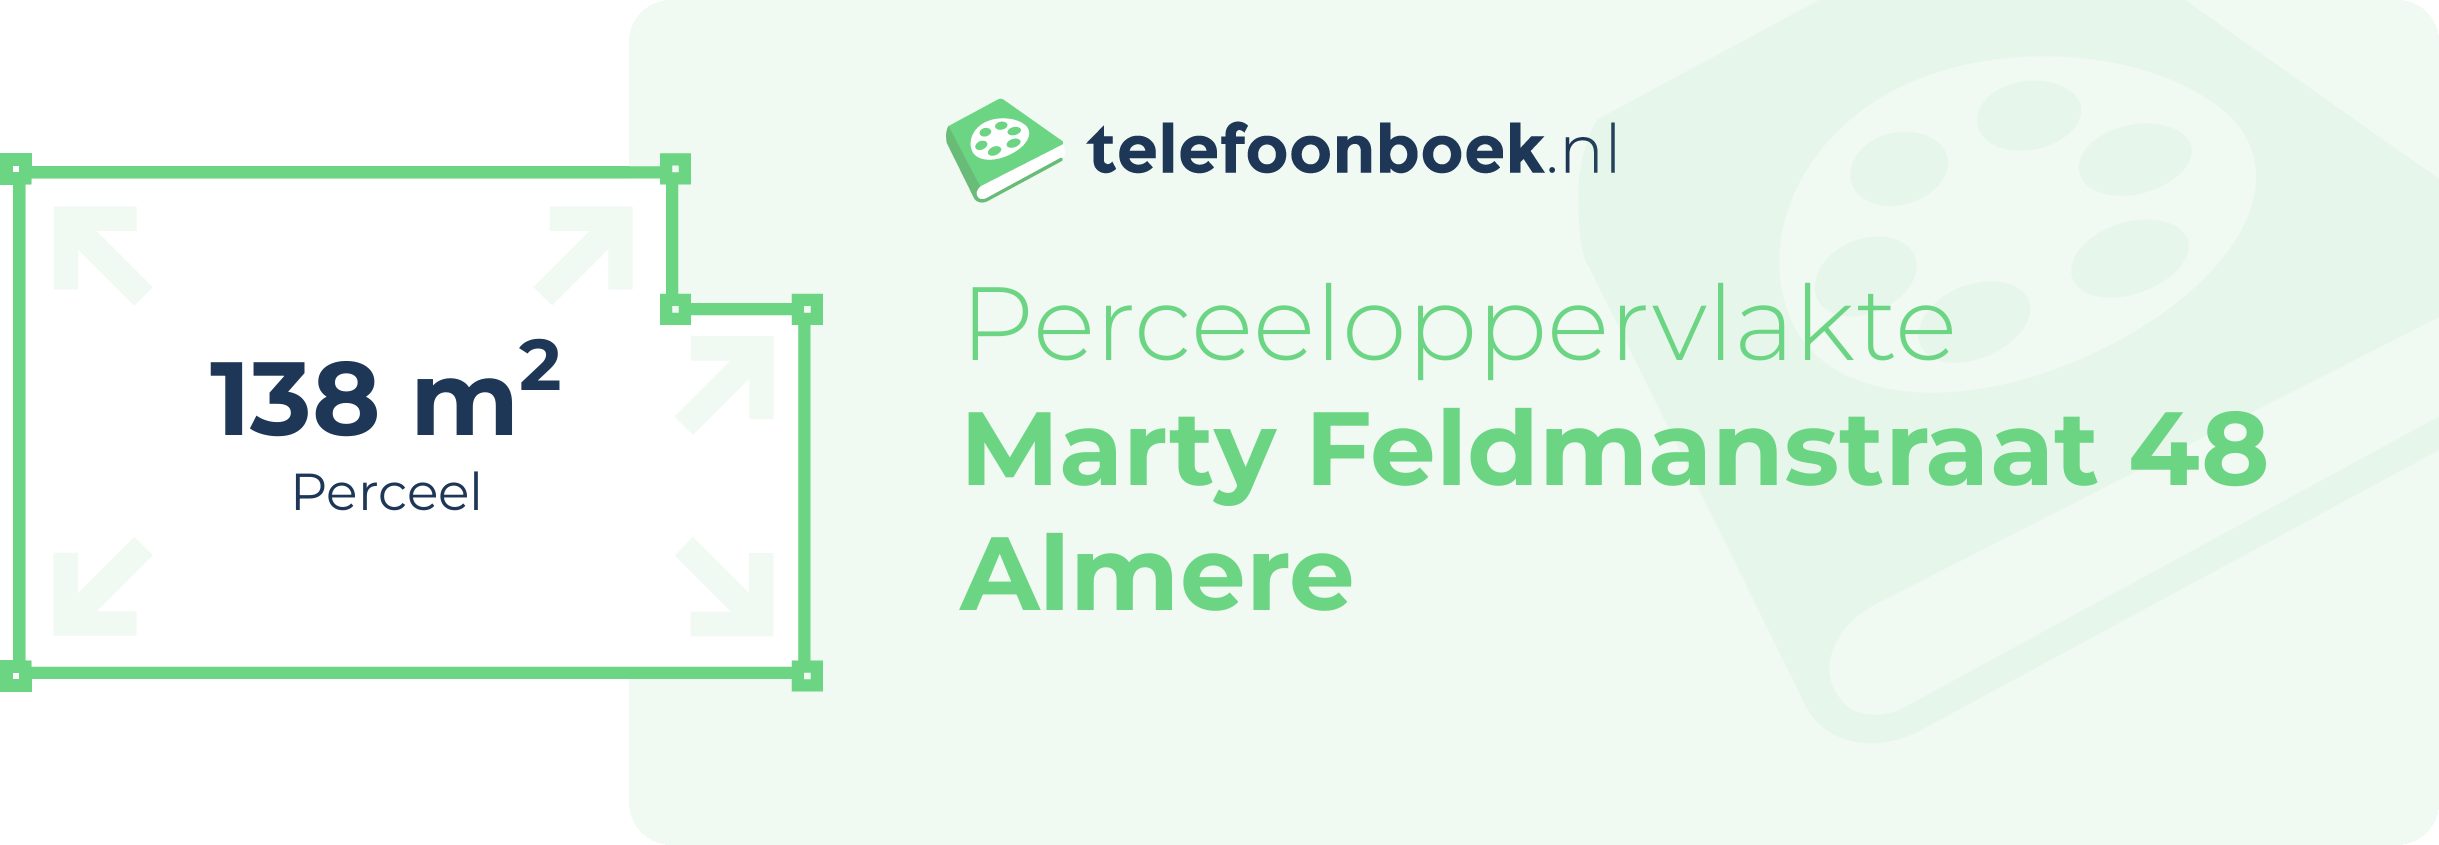 Perceeloppervlakte Marty Feldmanstraat 48 Almere